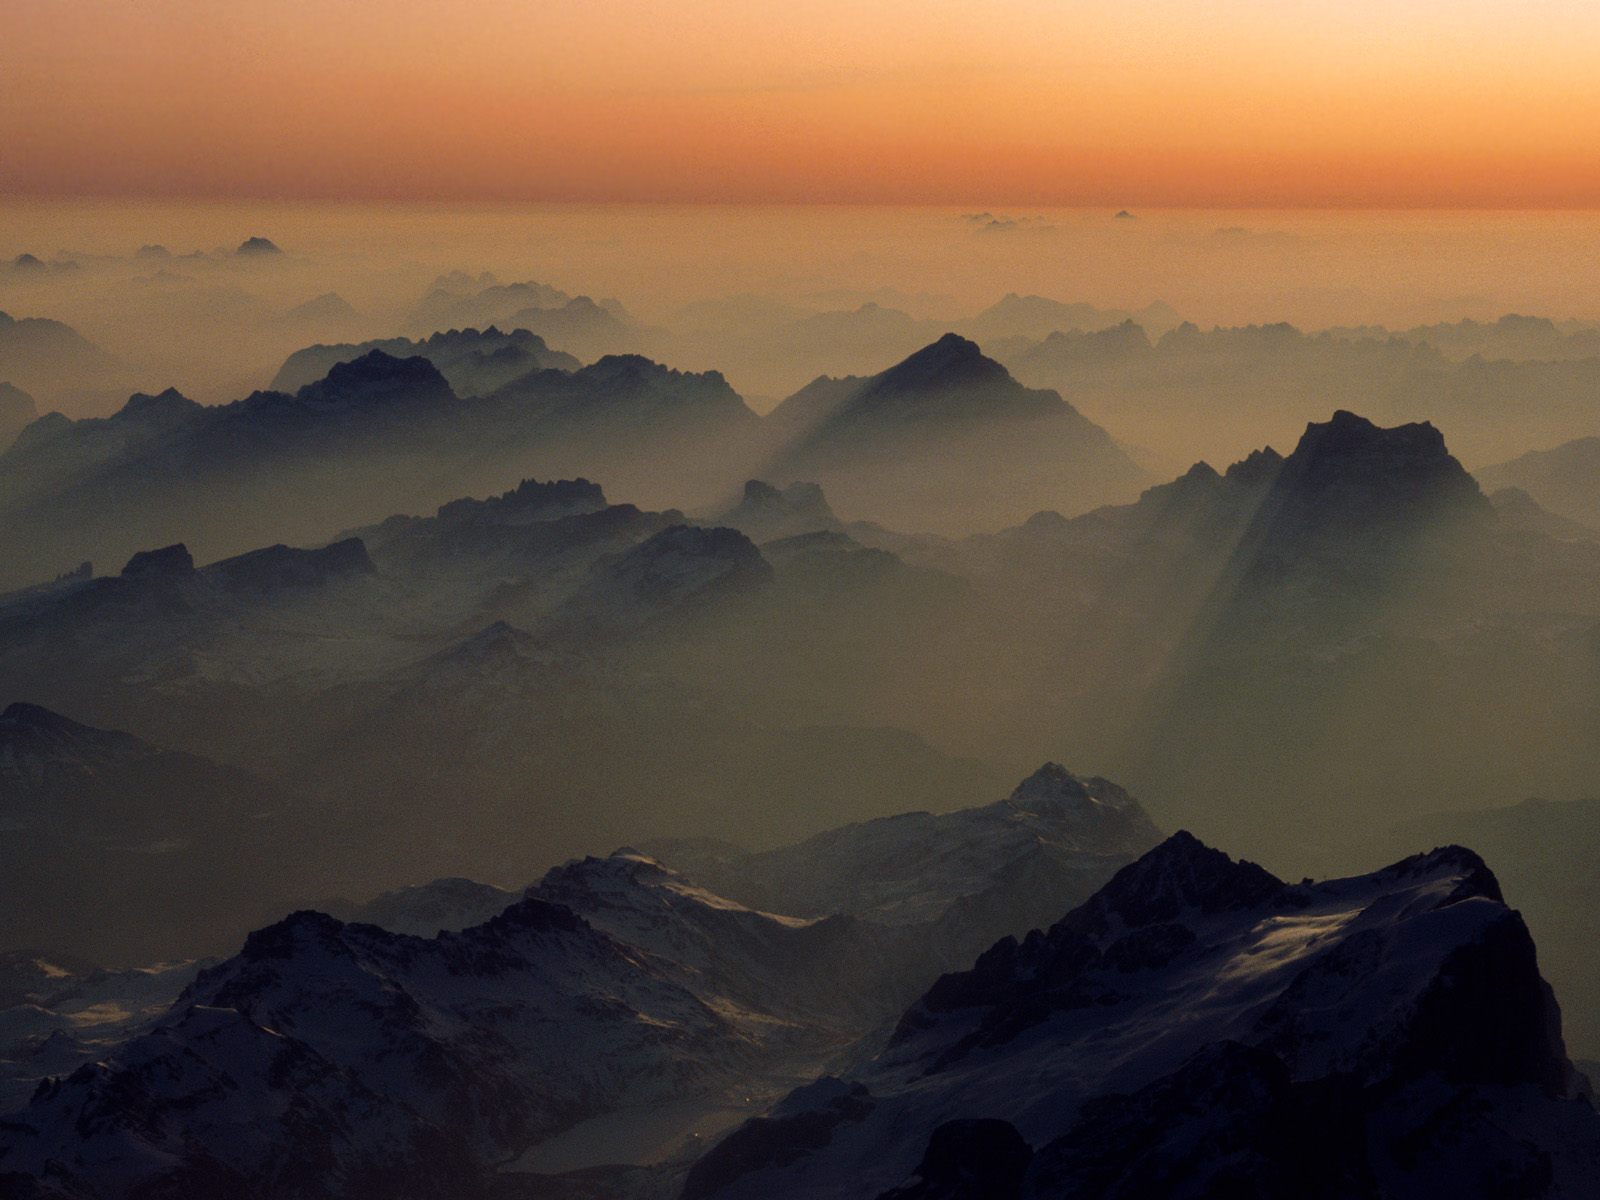 https://blogger.googleusercontent.com/img/b/R29vZ2xl/AVvXsEhqrBU1Zcb9EV3aCKkQhZ-TK2H0Y3Wi1QeKptCZDU73JYw3qRuFsdWGZatWTE4FiWXCuCYe9GJNrsR4cp2x4vDPbzjGAB9U9V2IZg7TGNVCuD4yhbN2cmu3iT4AYUmpcKmZzbCpCKWBWEs/s1600/Misty+Peaks,+Alps,+Austria.jpg